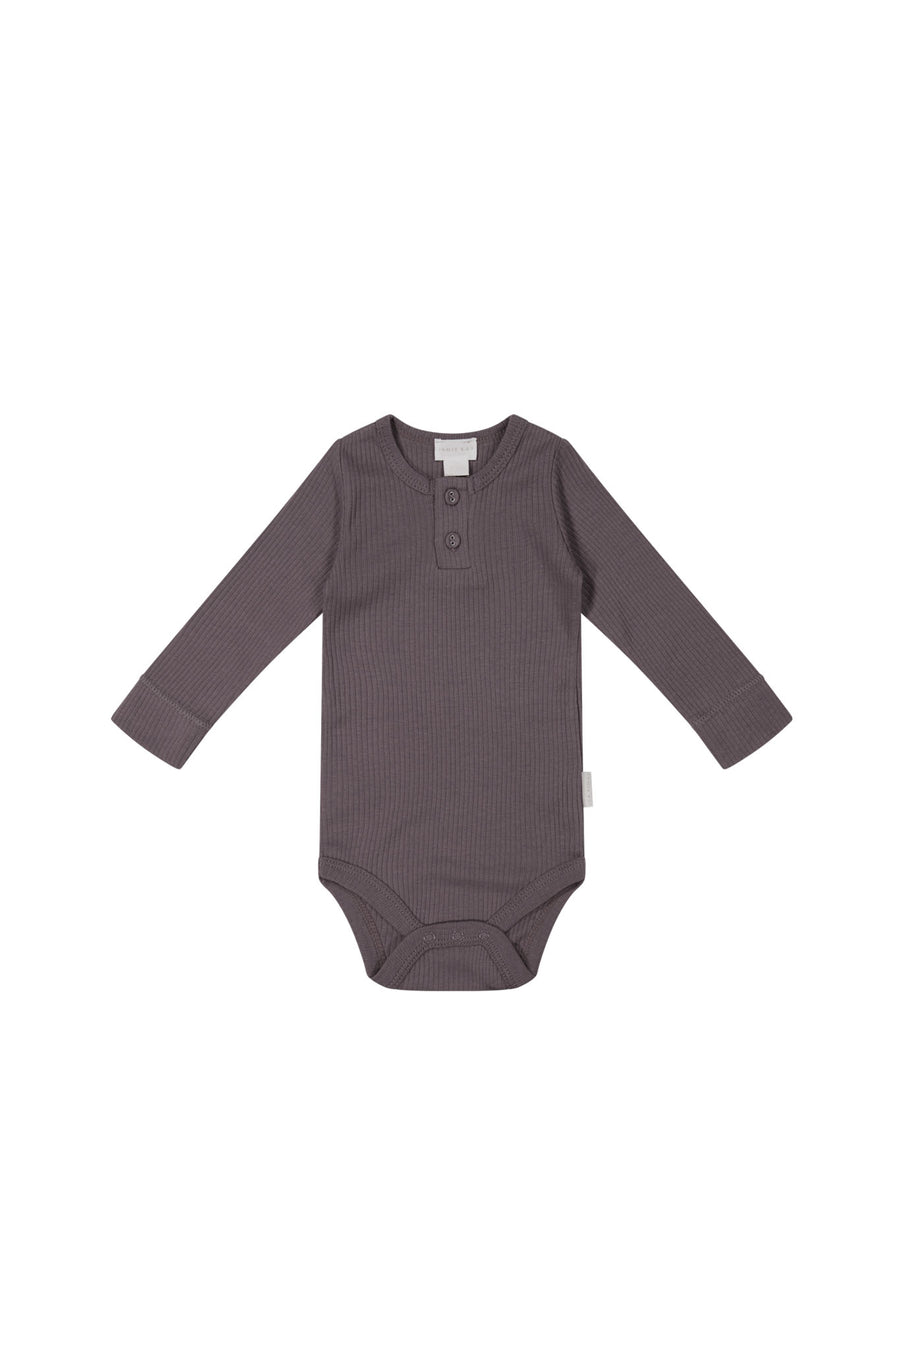 Organic Cotton Modal Long Sleeve Bodysuit - Carob Childrens Bodysuit from Jamie Kay NZ